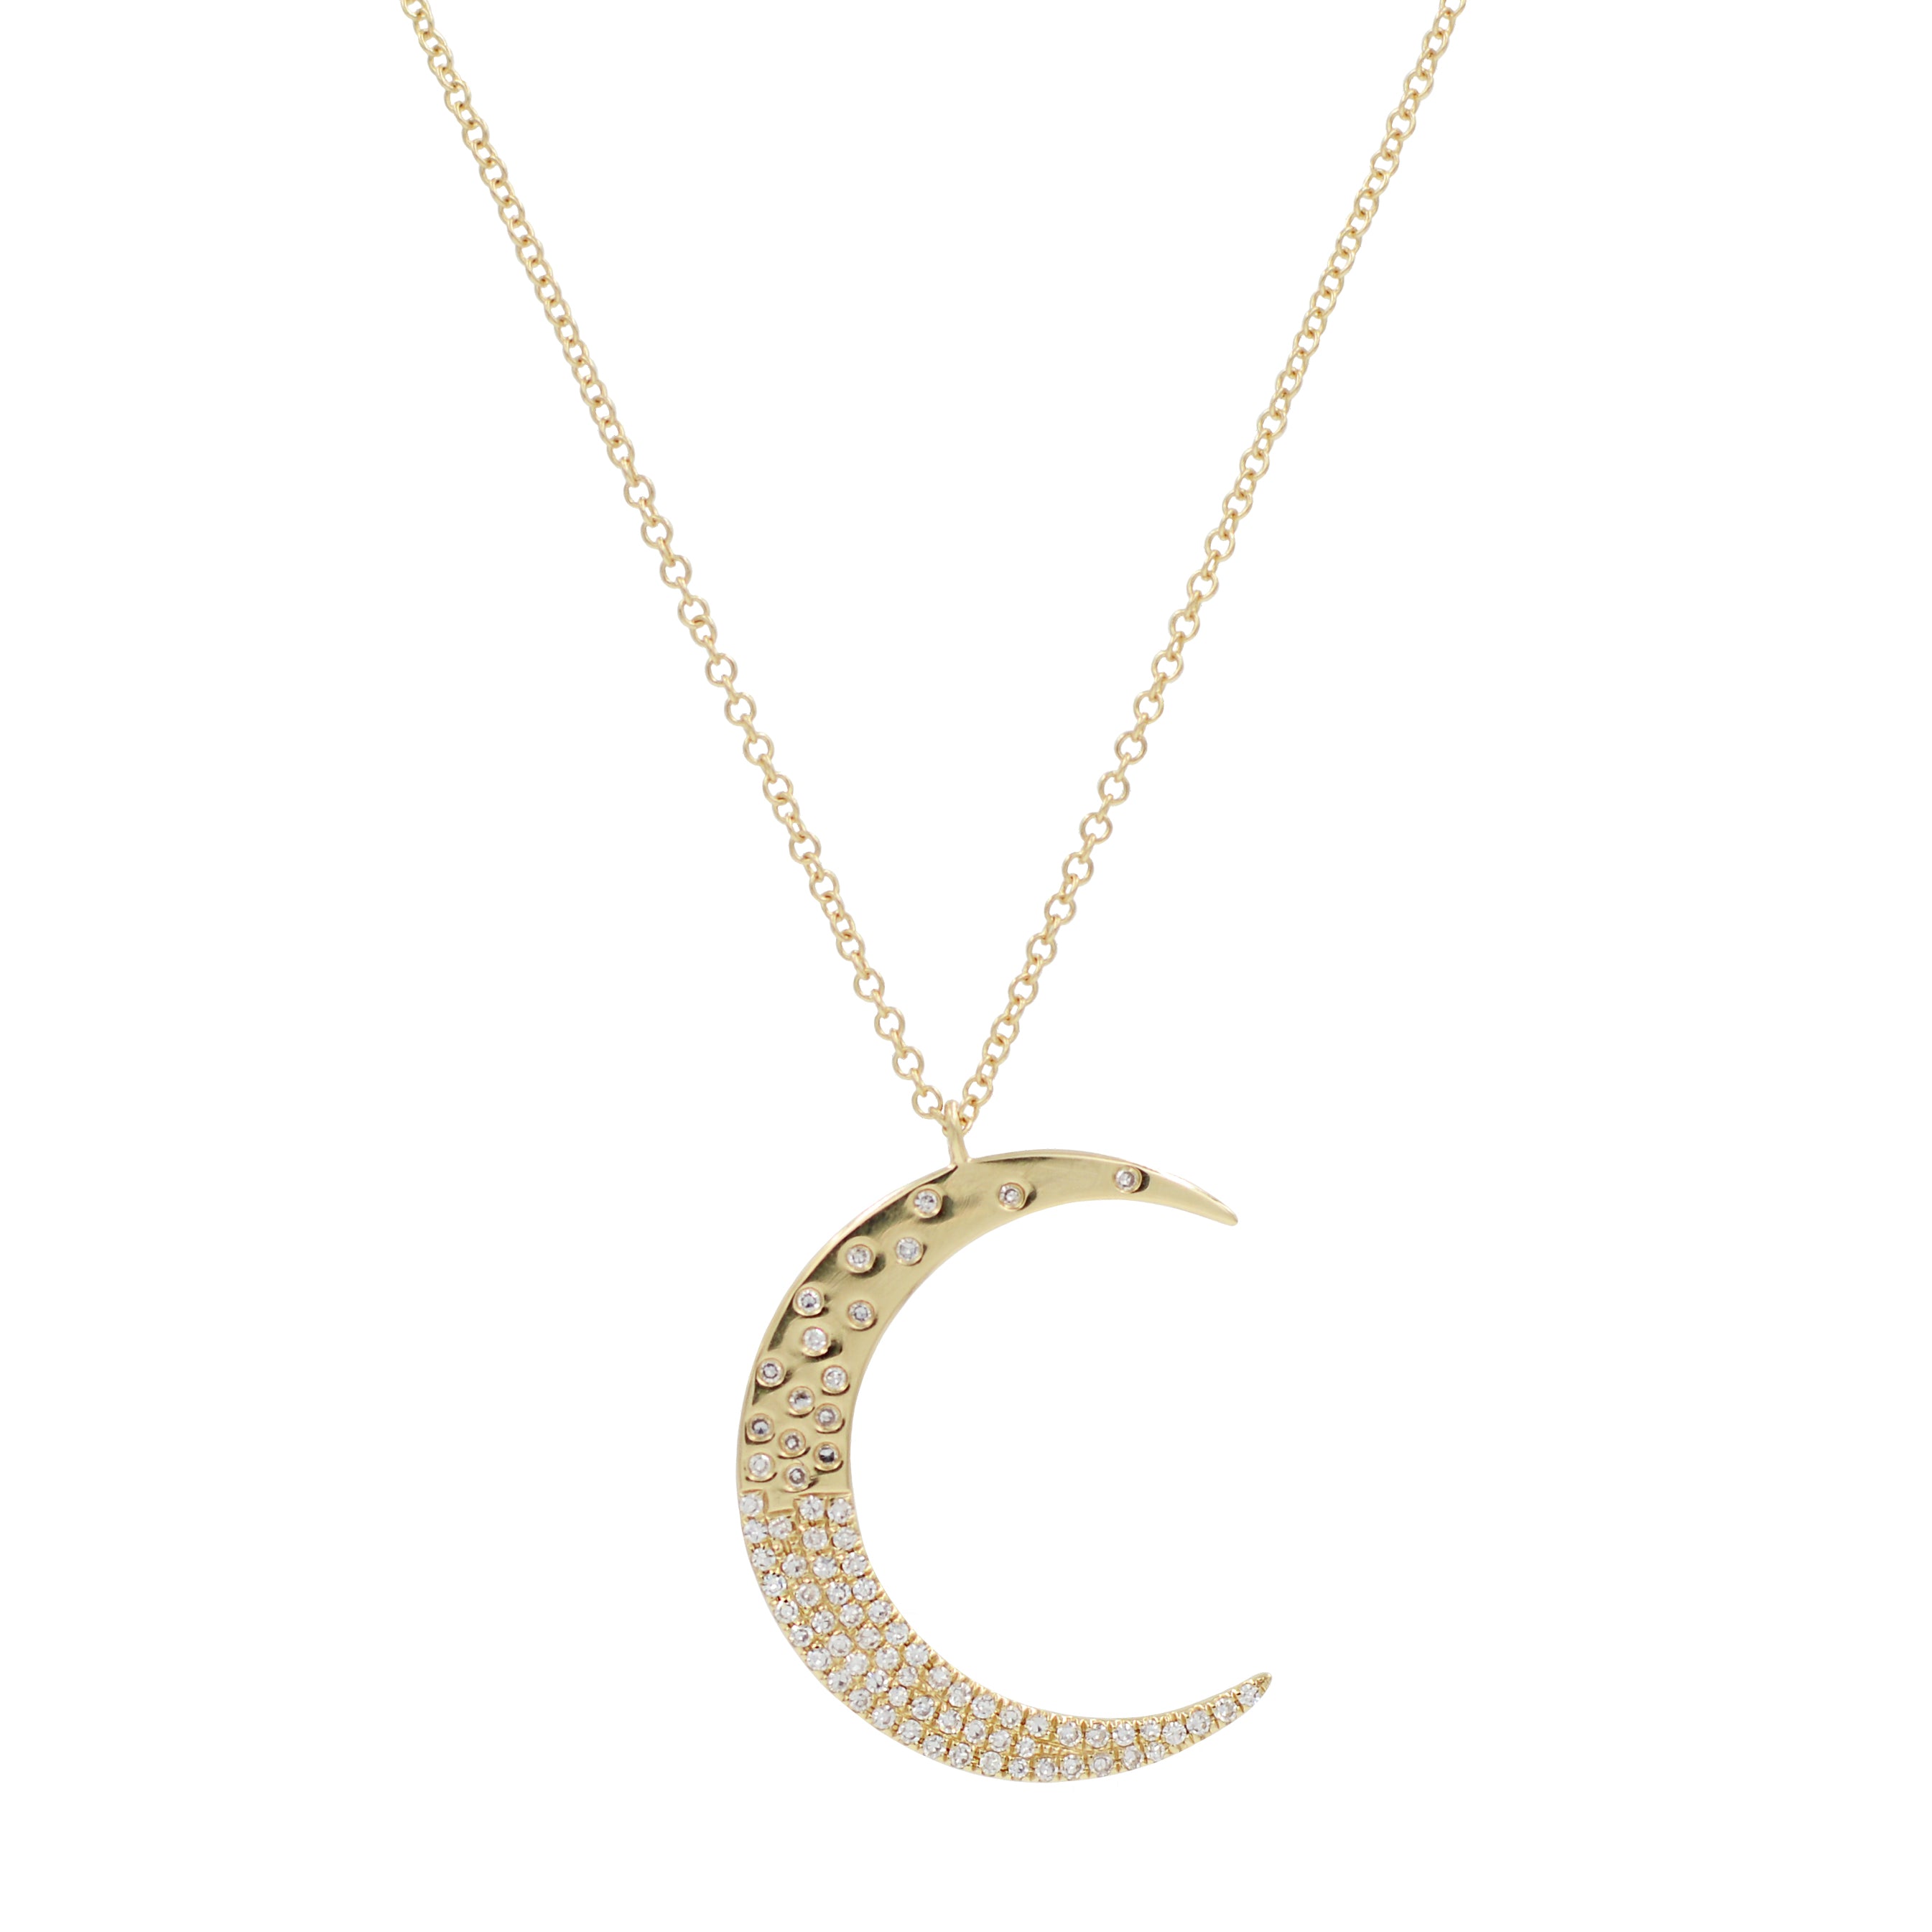 Marine Serre Regenerated Crescent Moon Charm Necklace - Farfetch